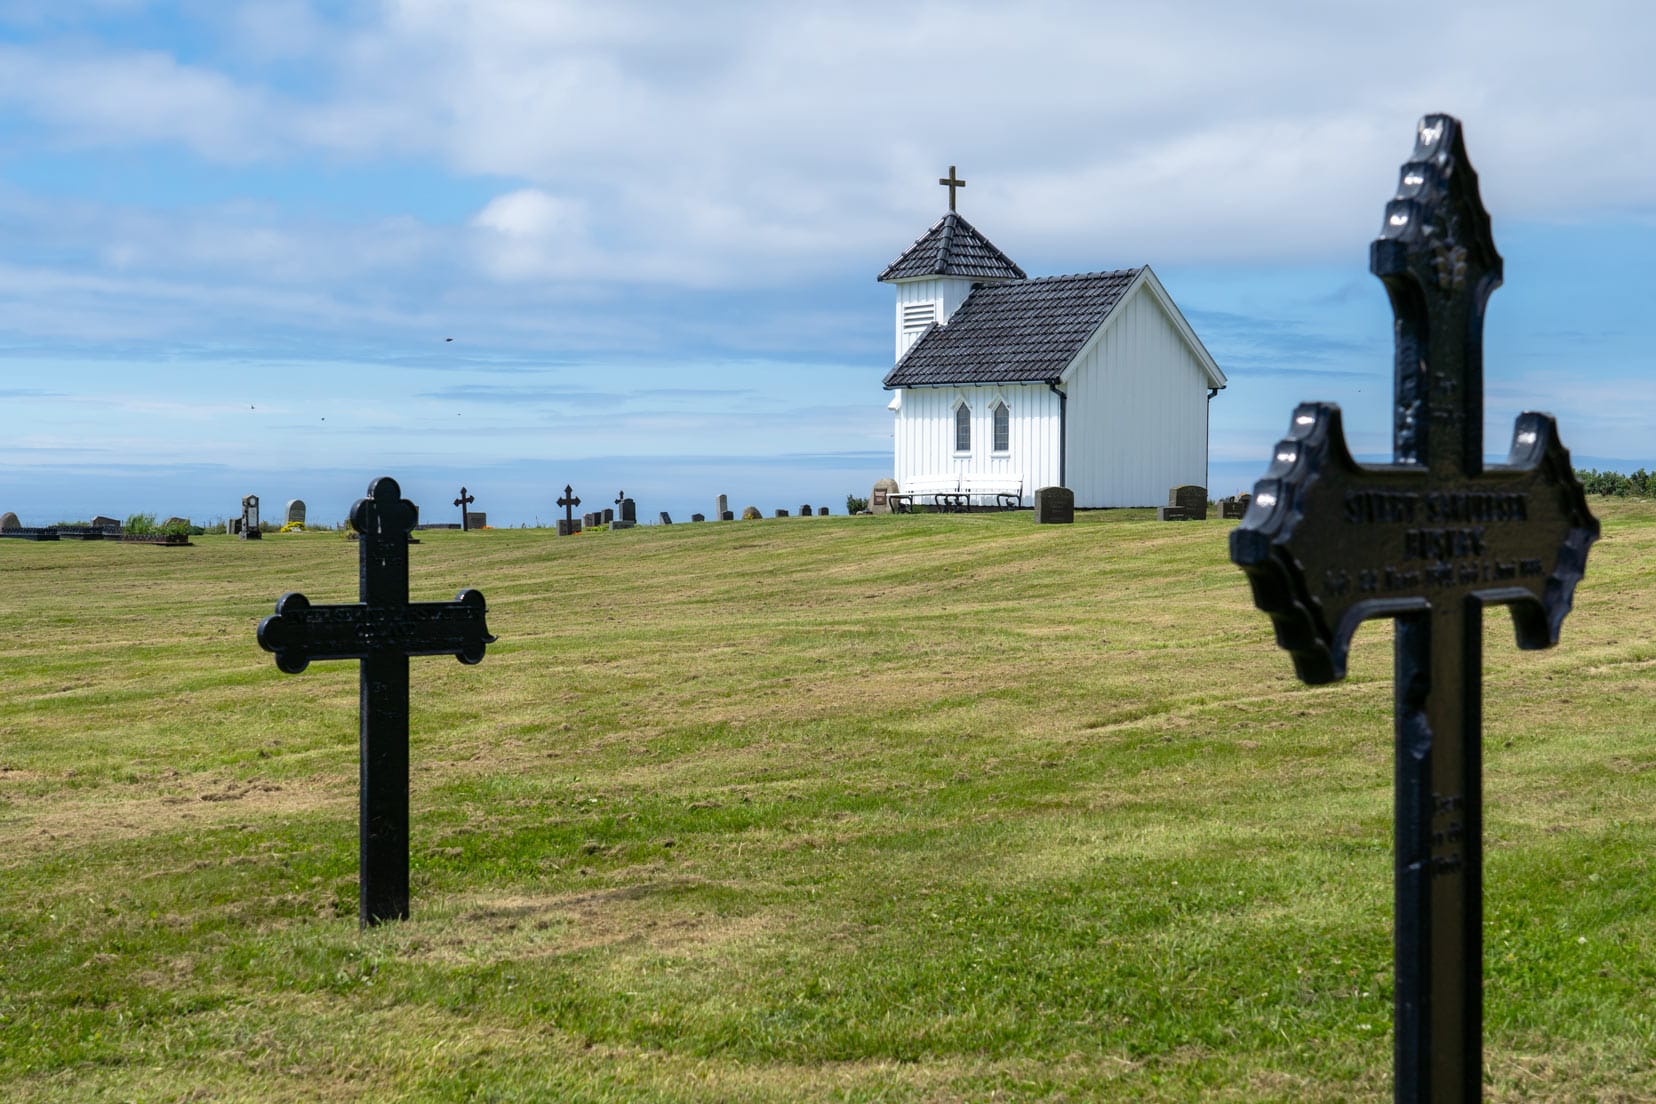 The old churchyard of Varhaug with black metal crosses and ocean in background